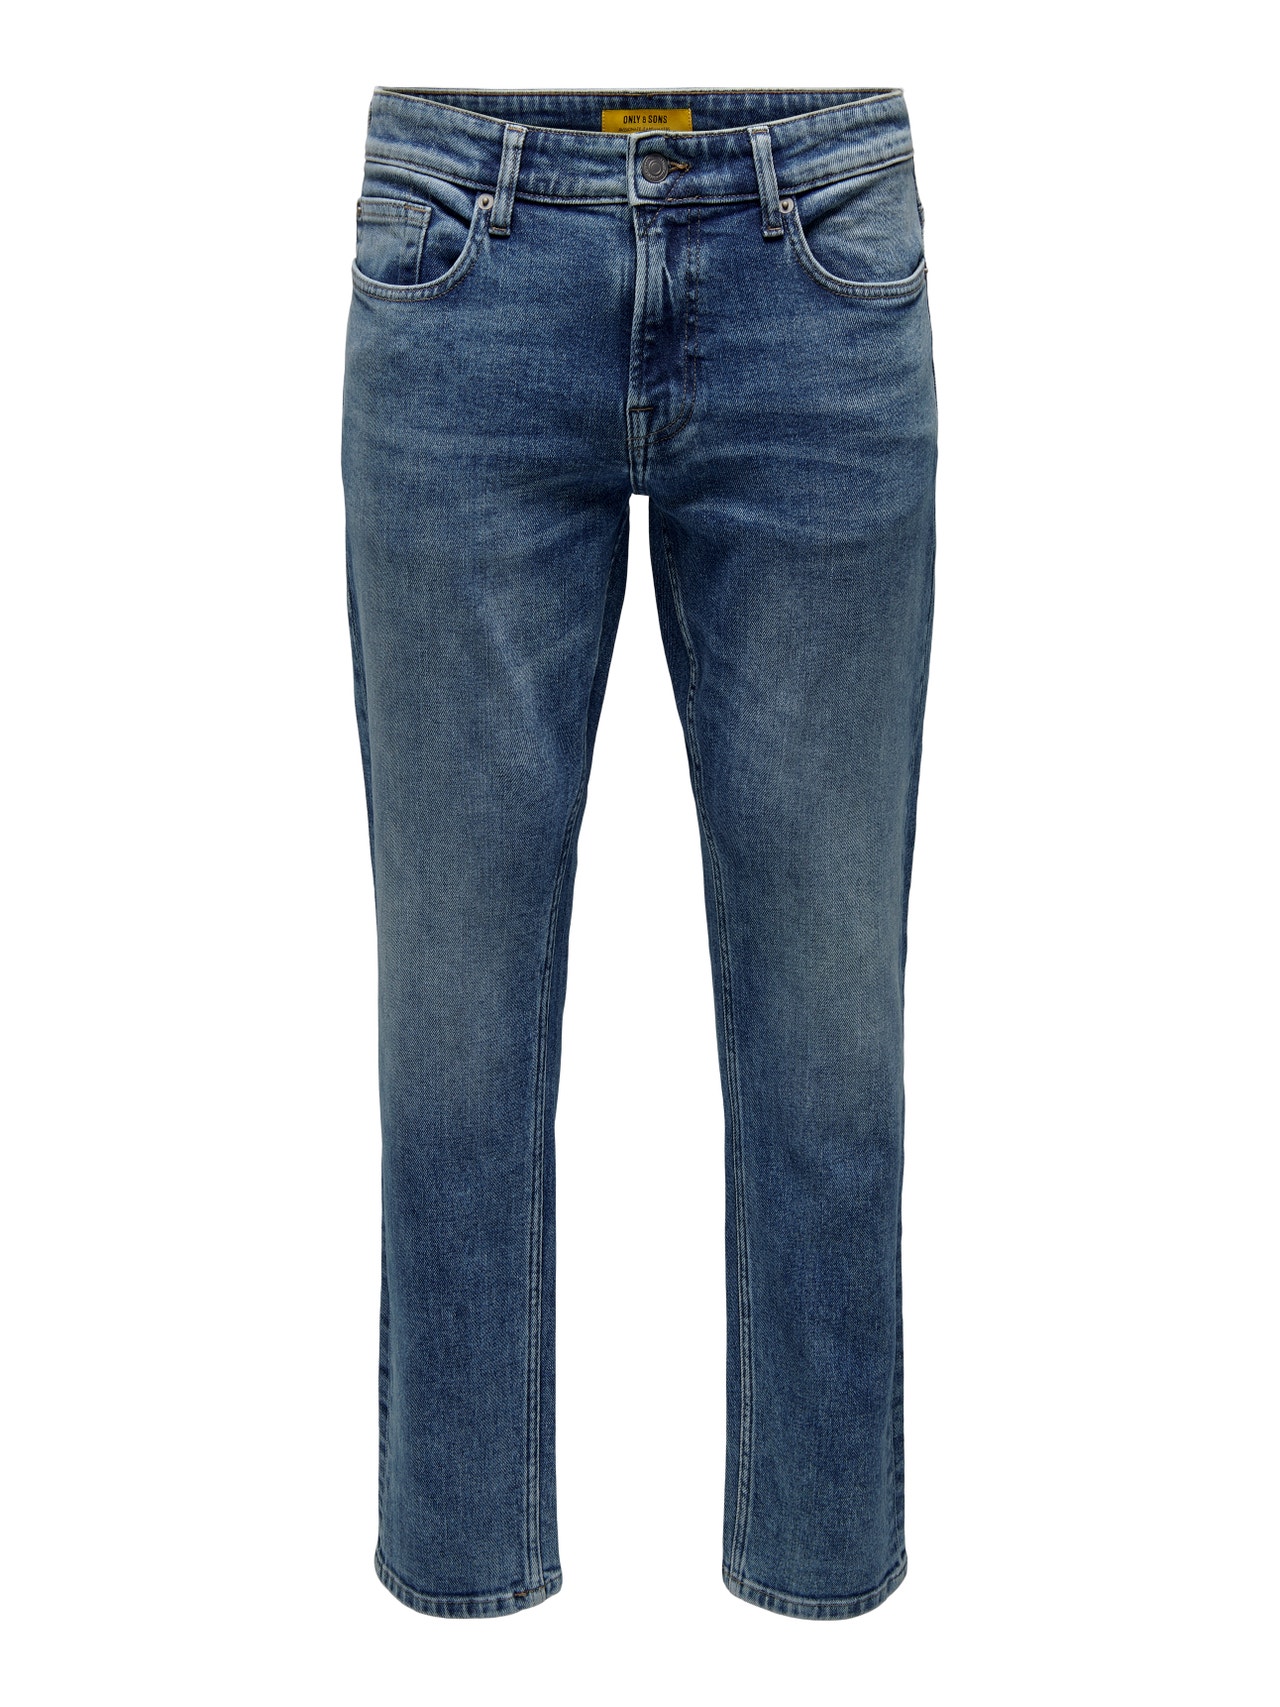 ONLY & SONS Jeans Regular Fit Taille classique -Medium Blue Denim - 22024872